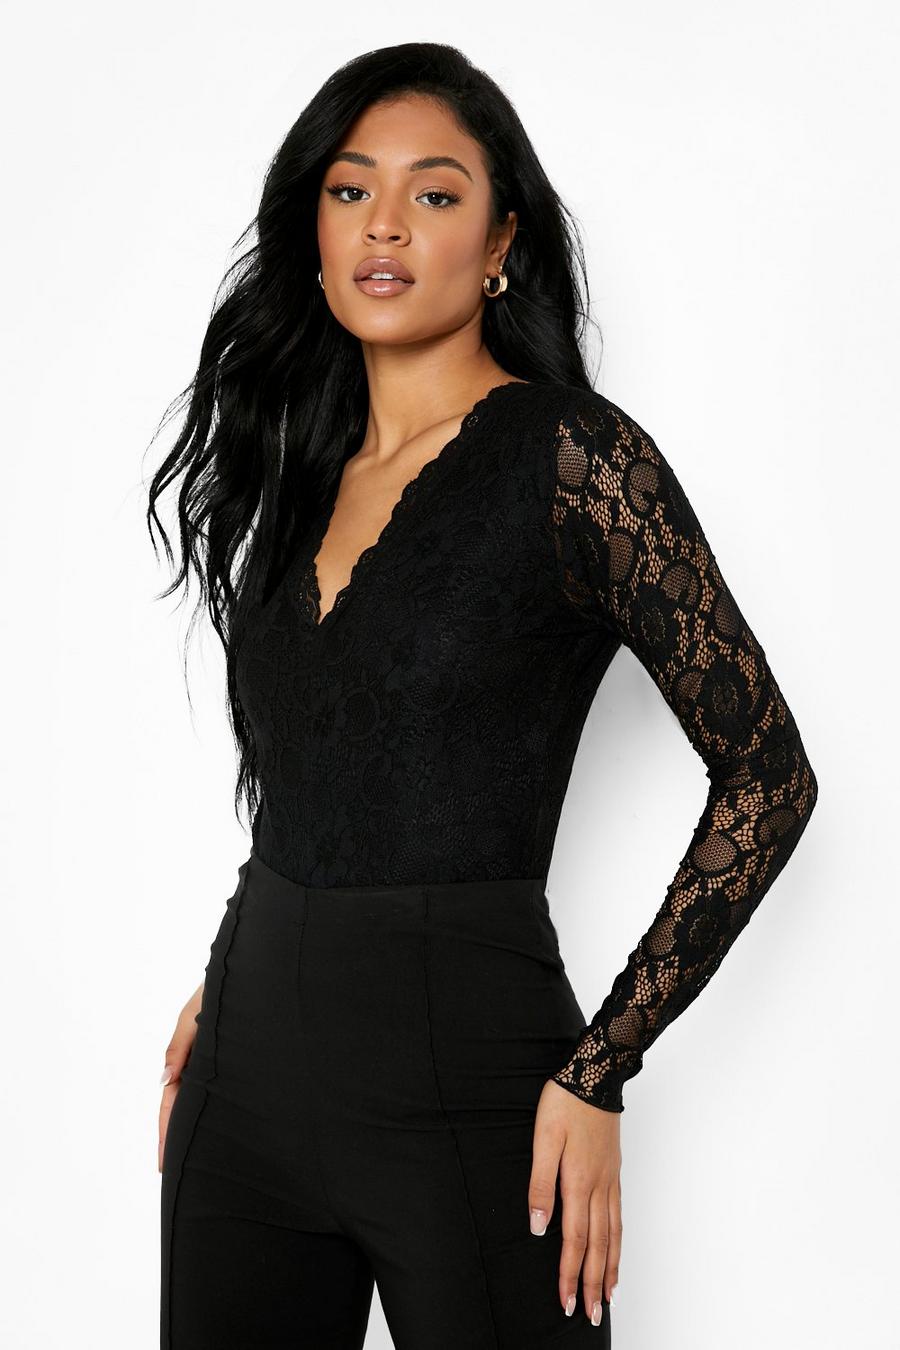 https://media.boohoo.com/i/boohoo/gzz06310_black_xl/female-black-tall-lace-long-sleeved-bodysuit/?w=900&qlt=default&fmt.jp2.qlt=70&fmt=auto&sm=fit